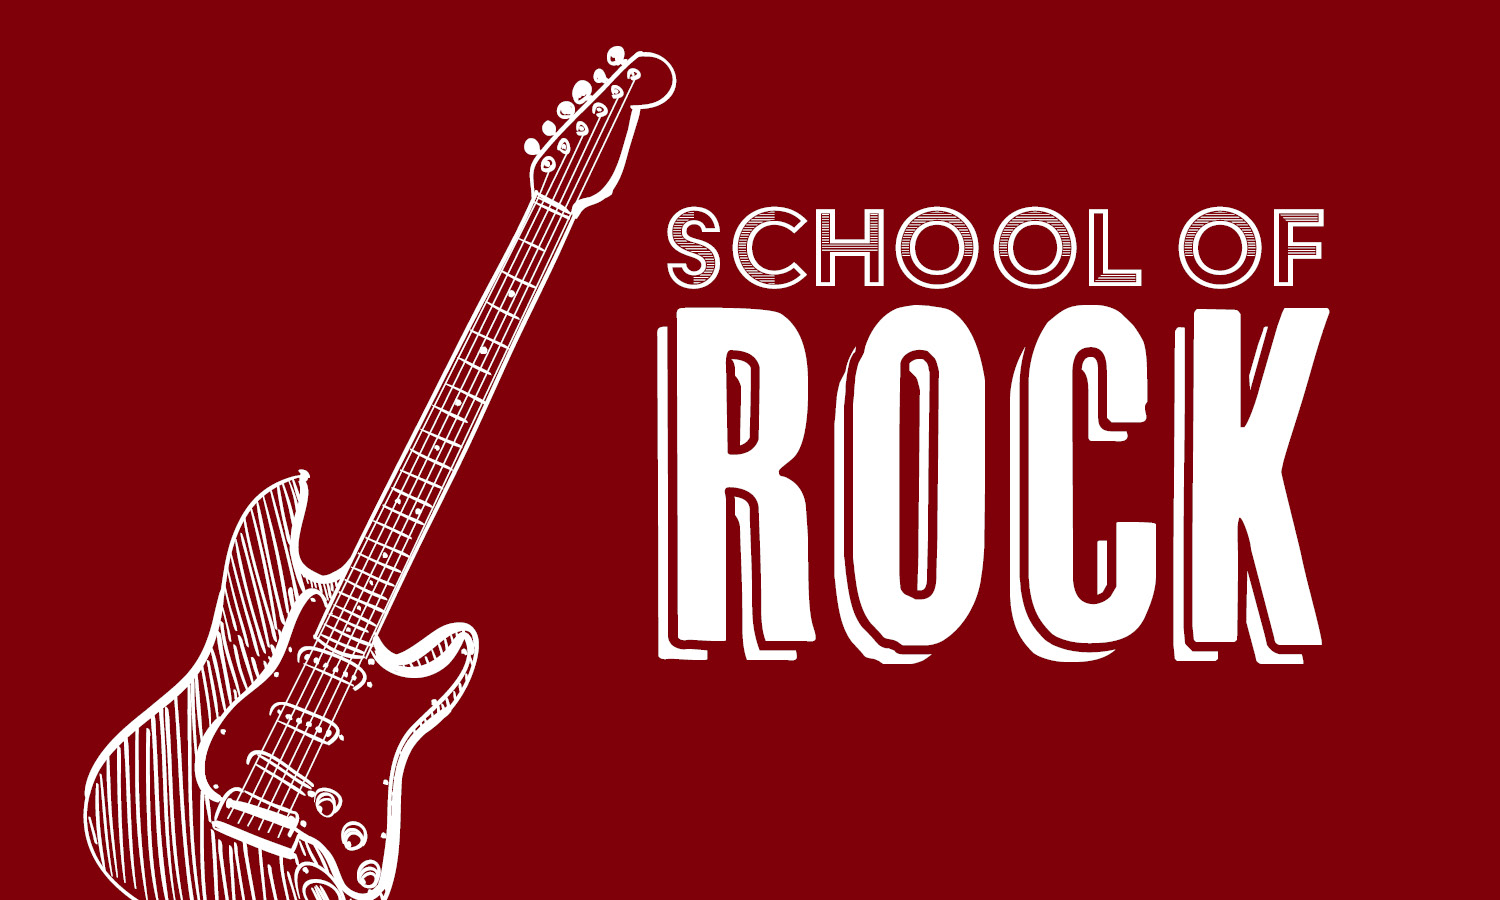 Illustration of guitar. Text: School of Rock